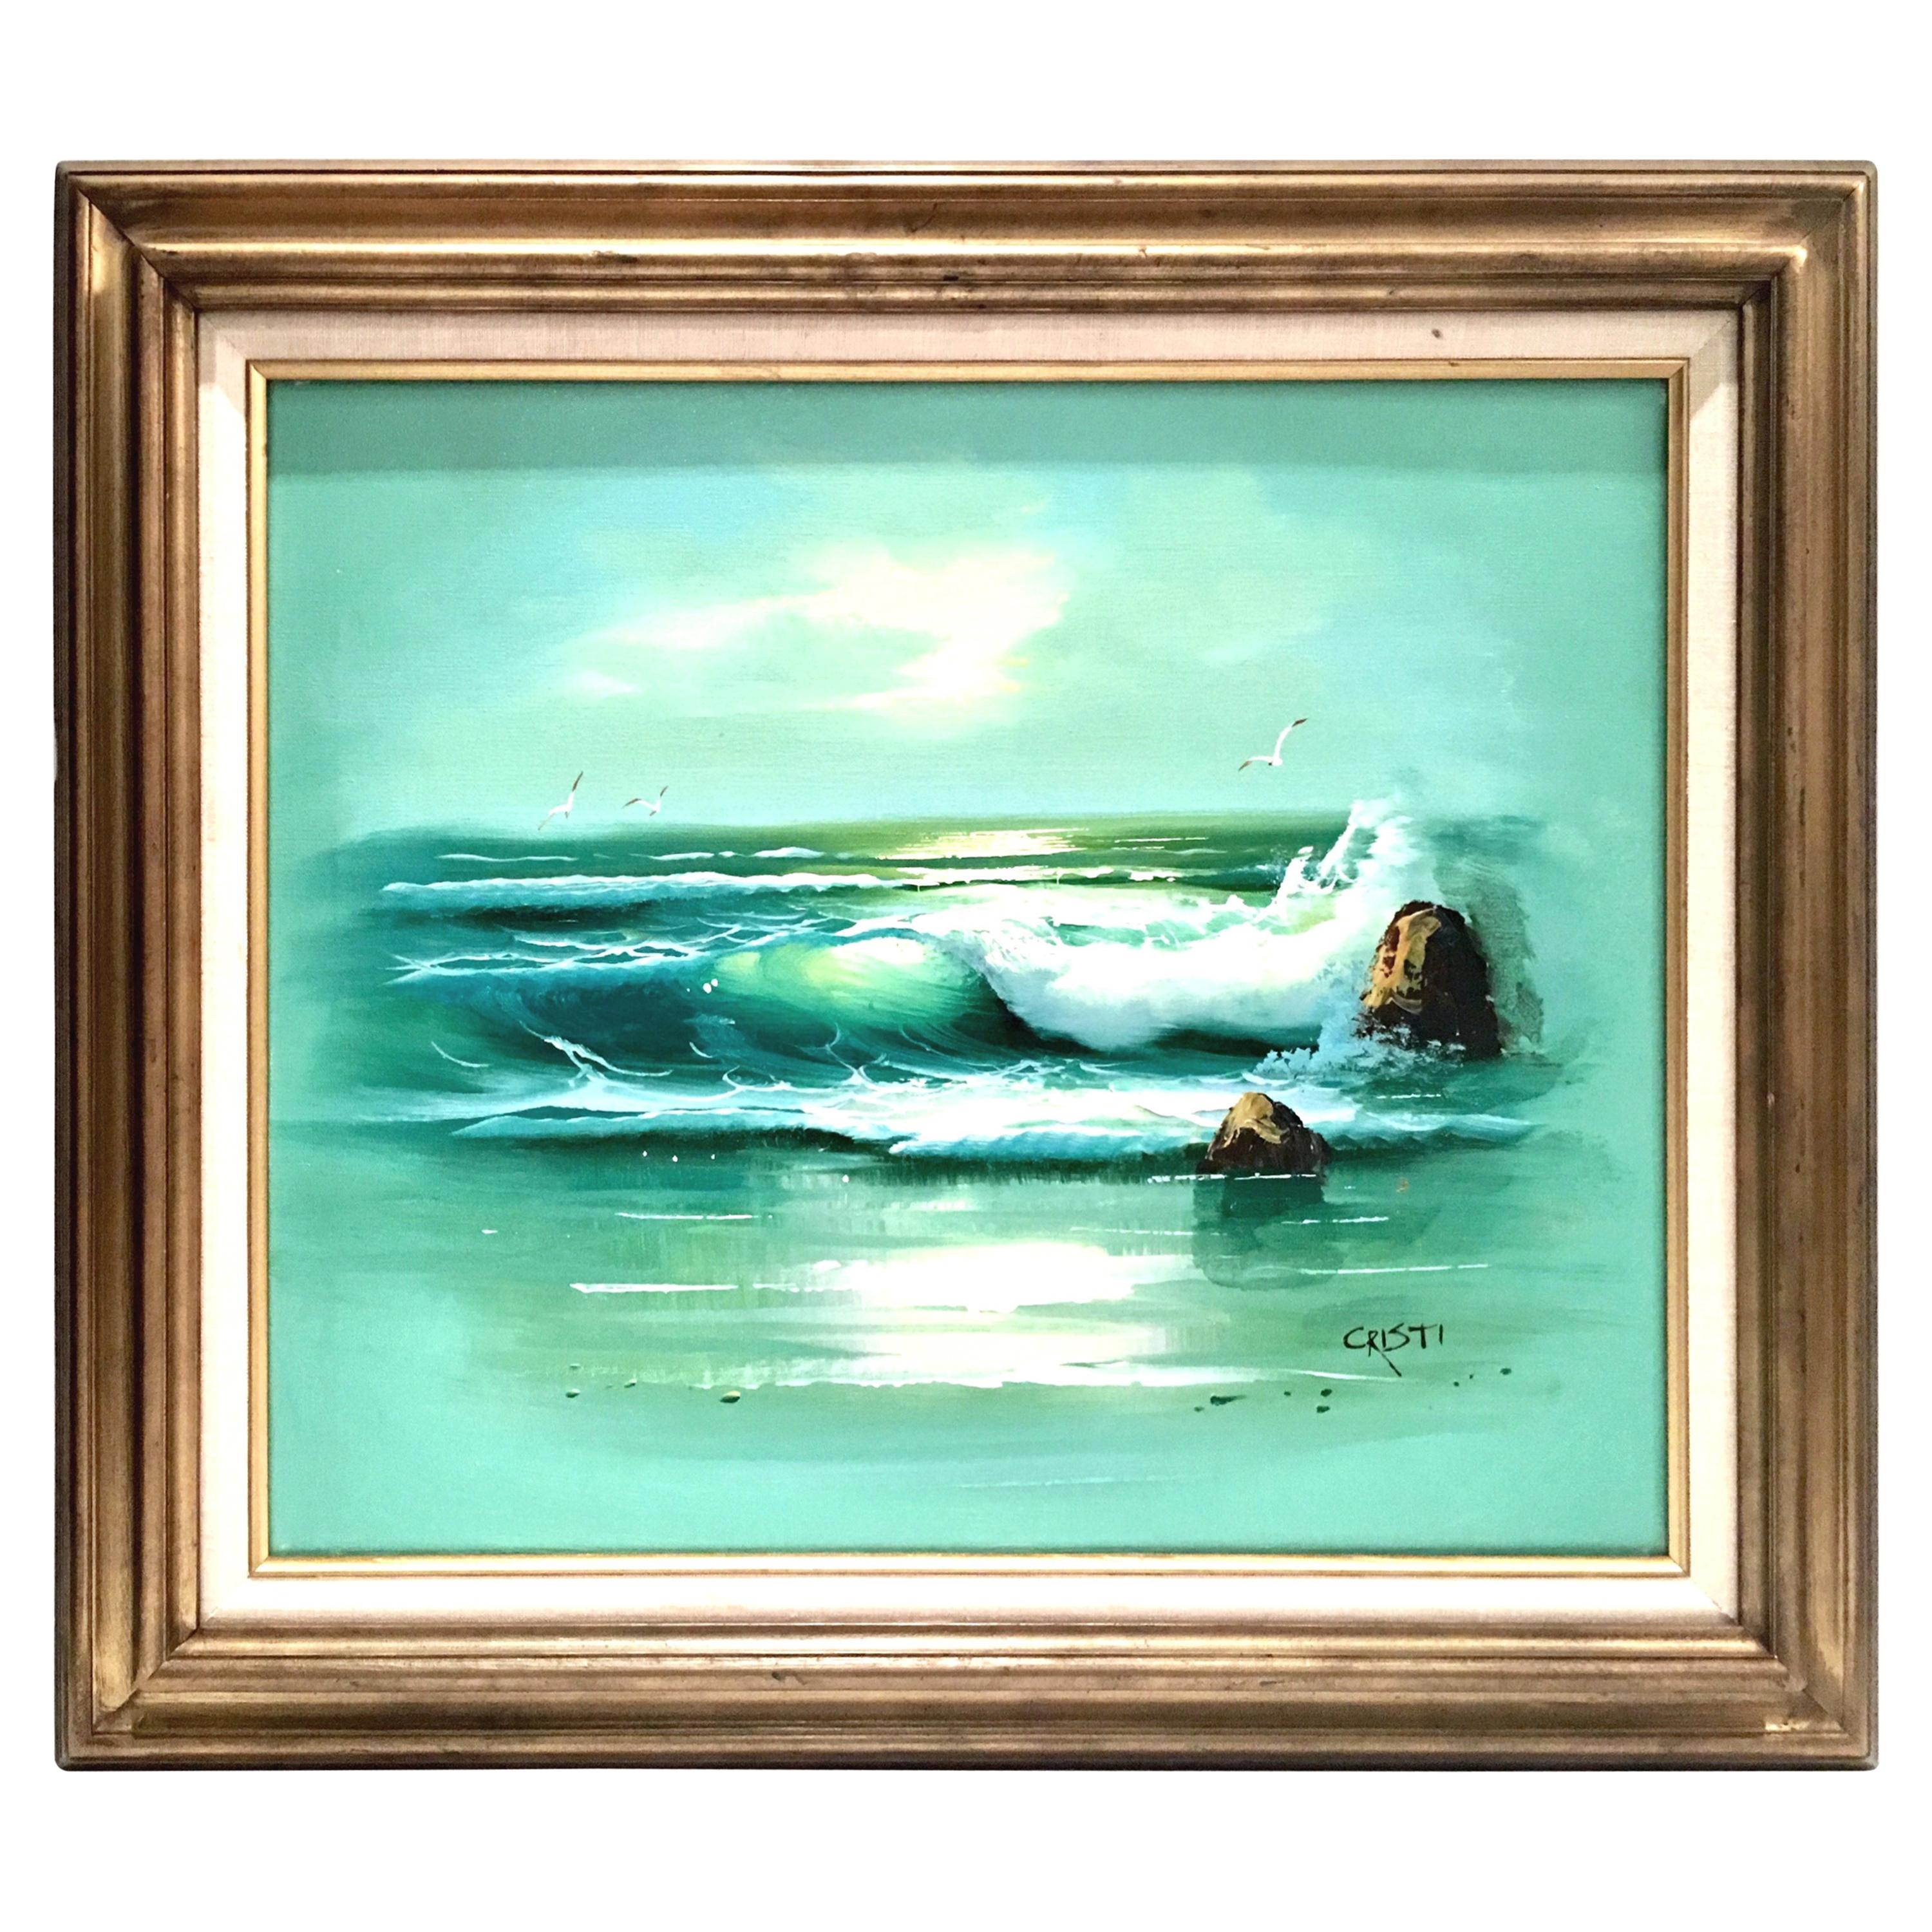 20th Century Italian Original Oil on Canvas Ocean Scene Painting by Cristi